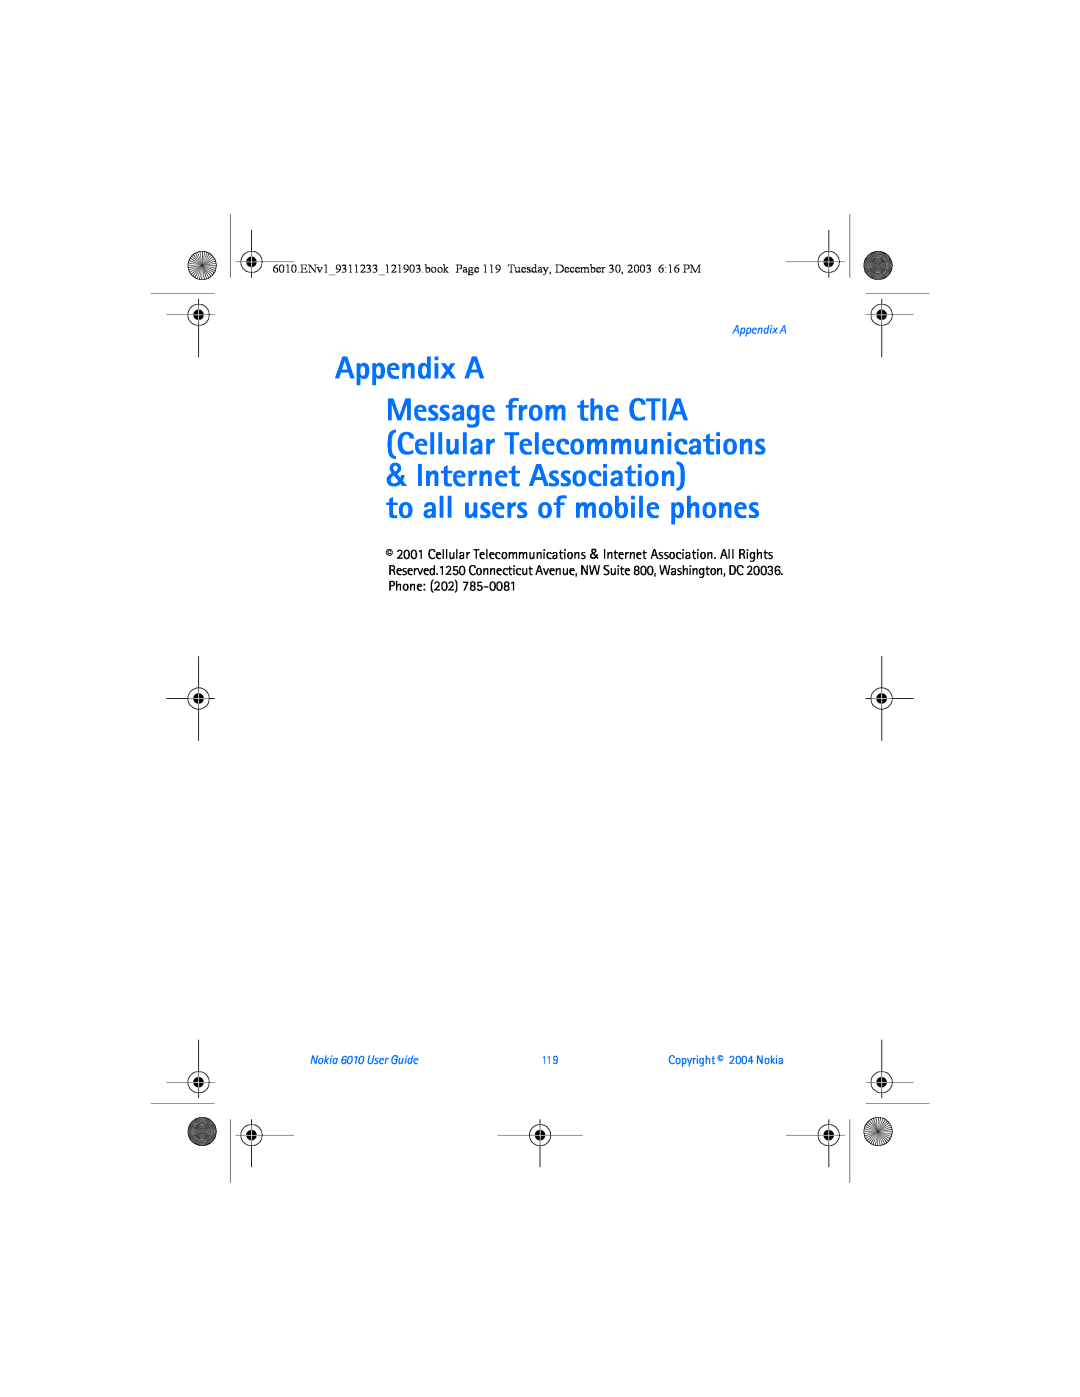 Nokia manual Appendix A Message from the CTIA Cellular Telecommunications, Nokia 6010 User Guide, Copyright 2004 Nokia 